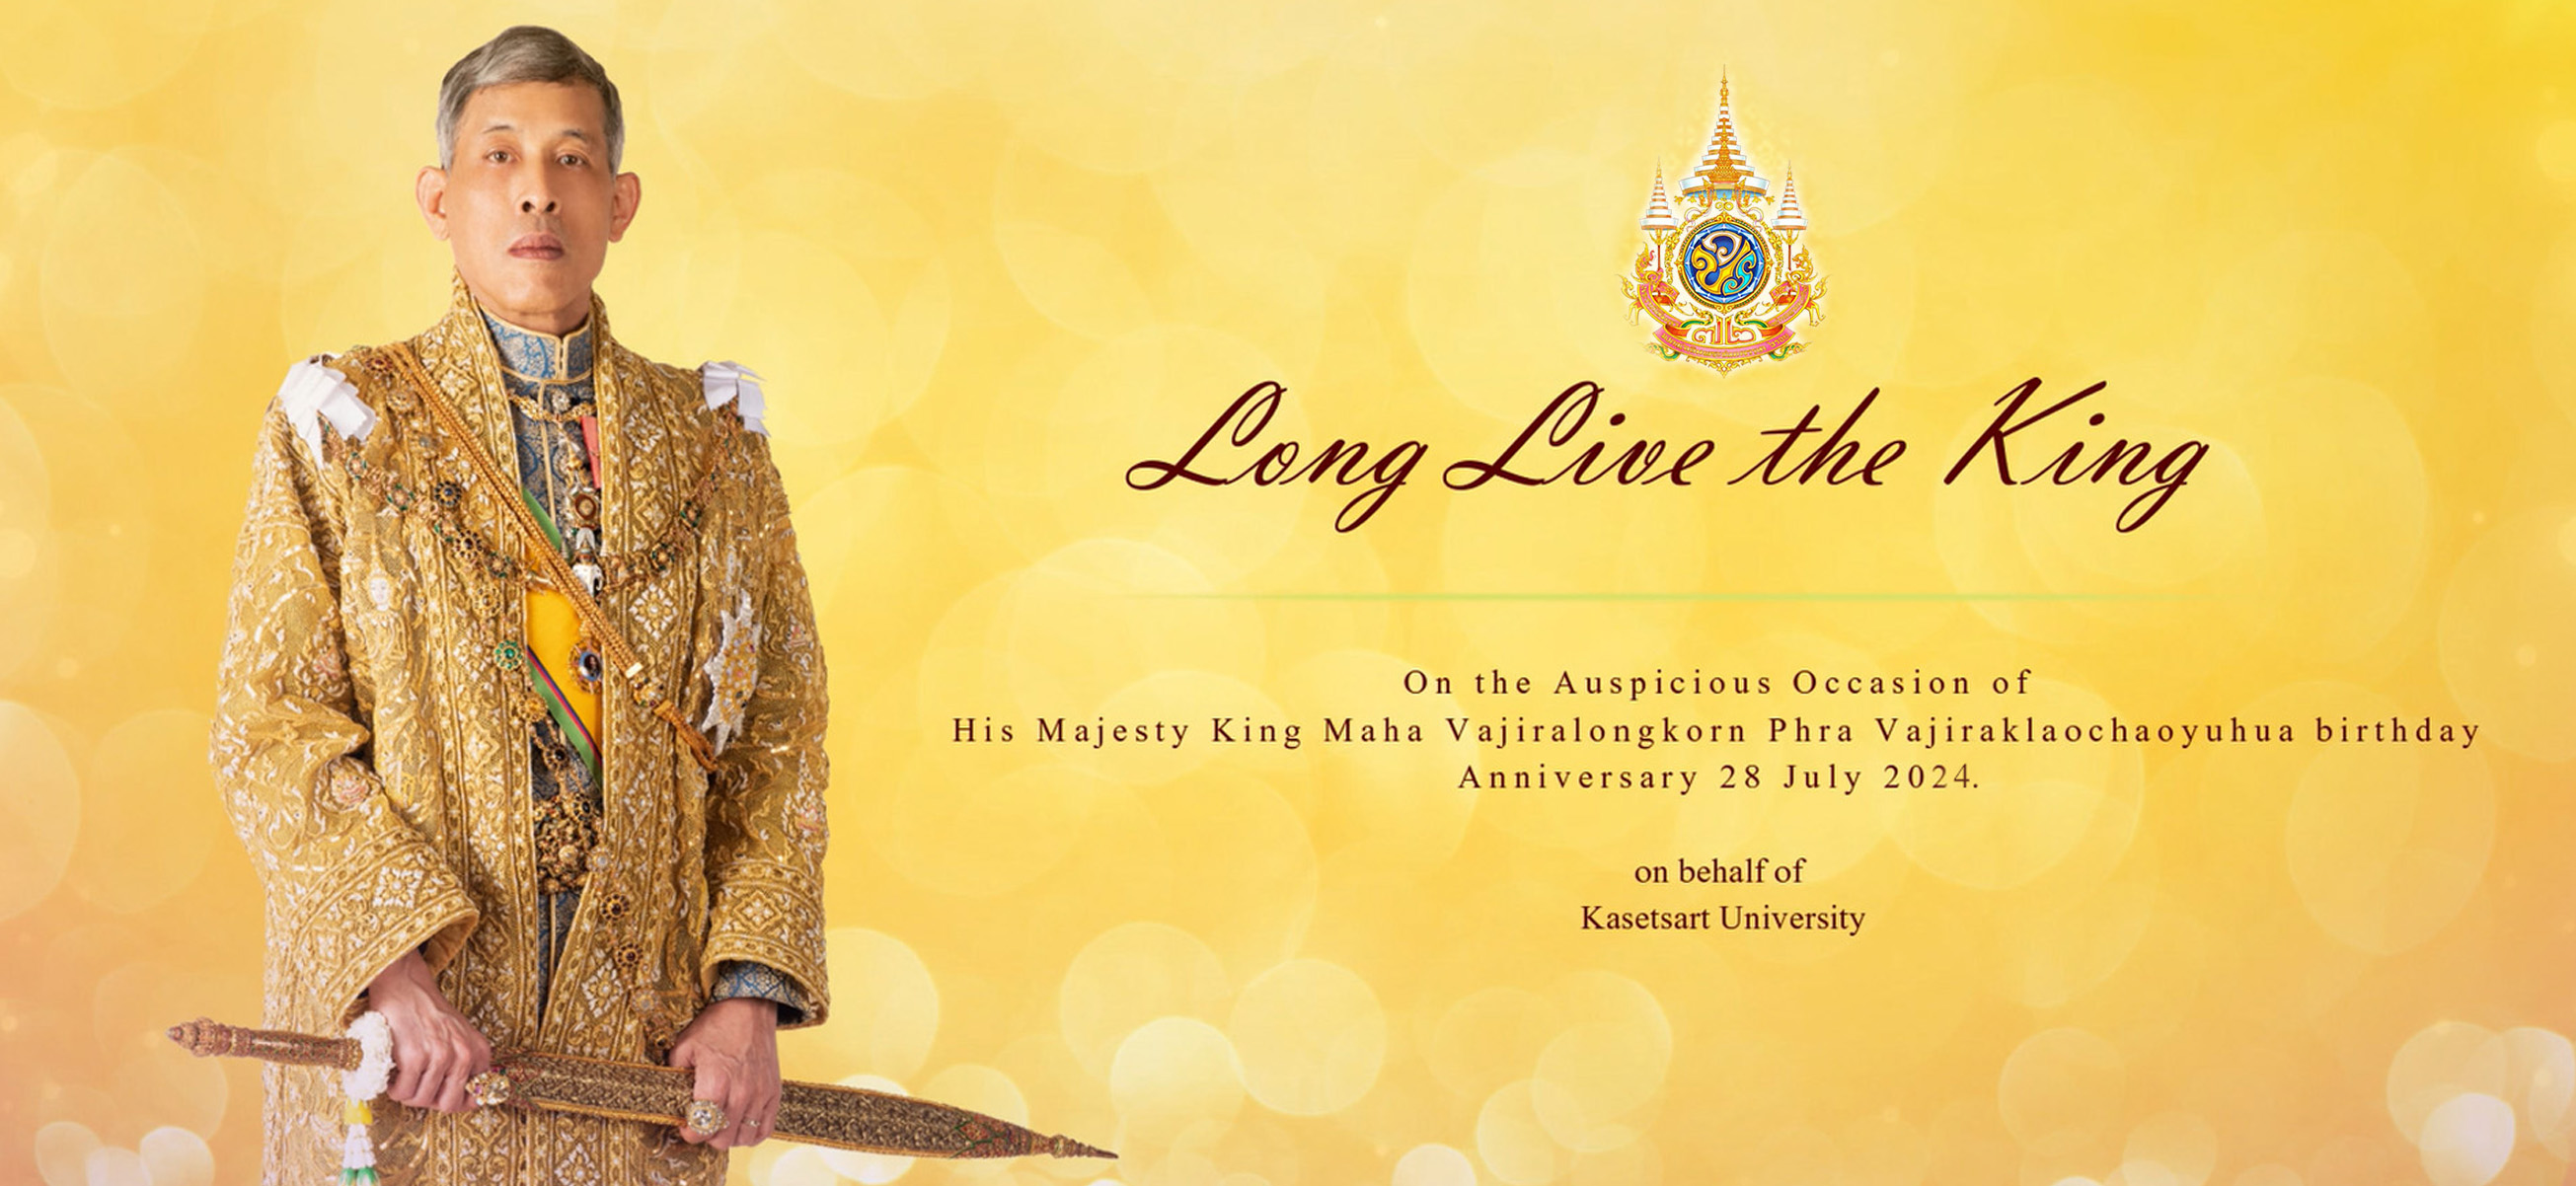 On the auspicious occasion of His Majesty King Maha Vajiralongkorn Phra Vajiraklaochaoyuhua’s birthday anniversary 28 July 2024.